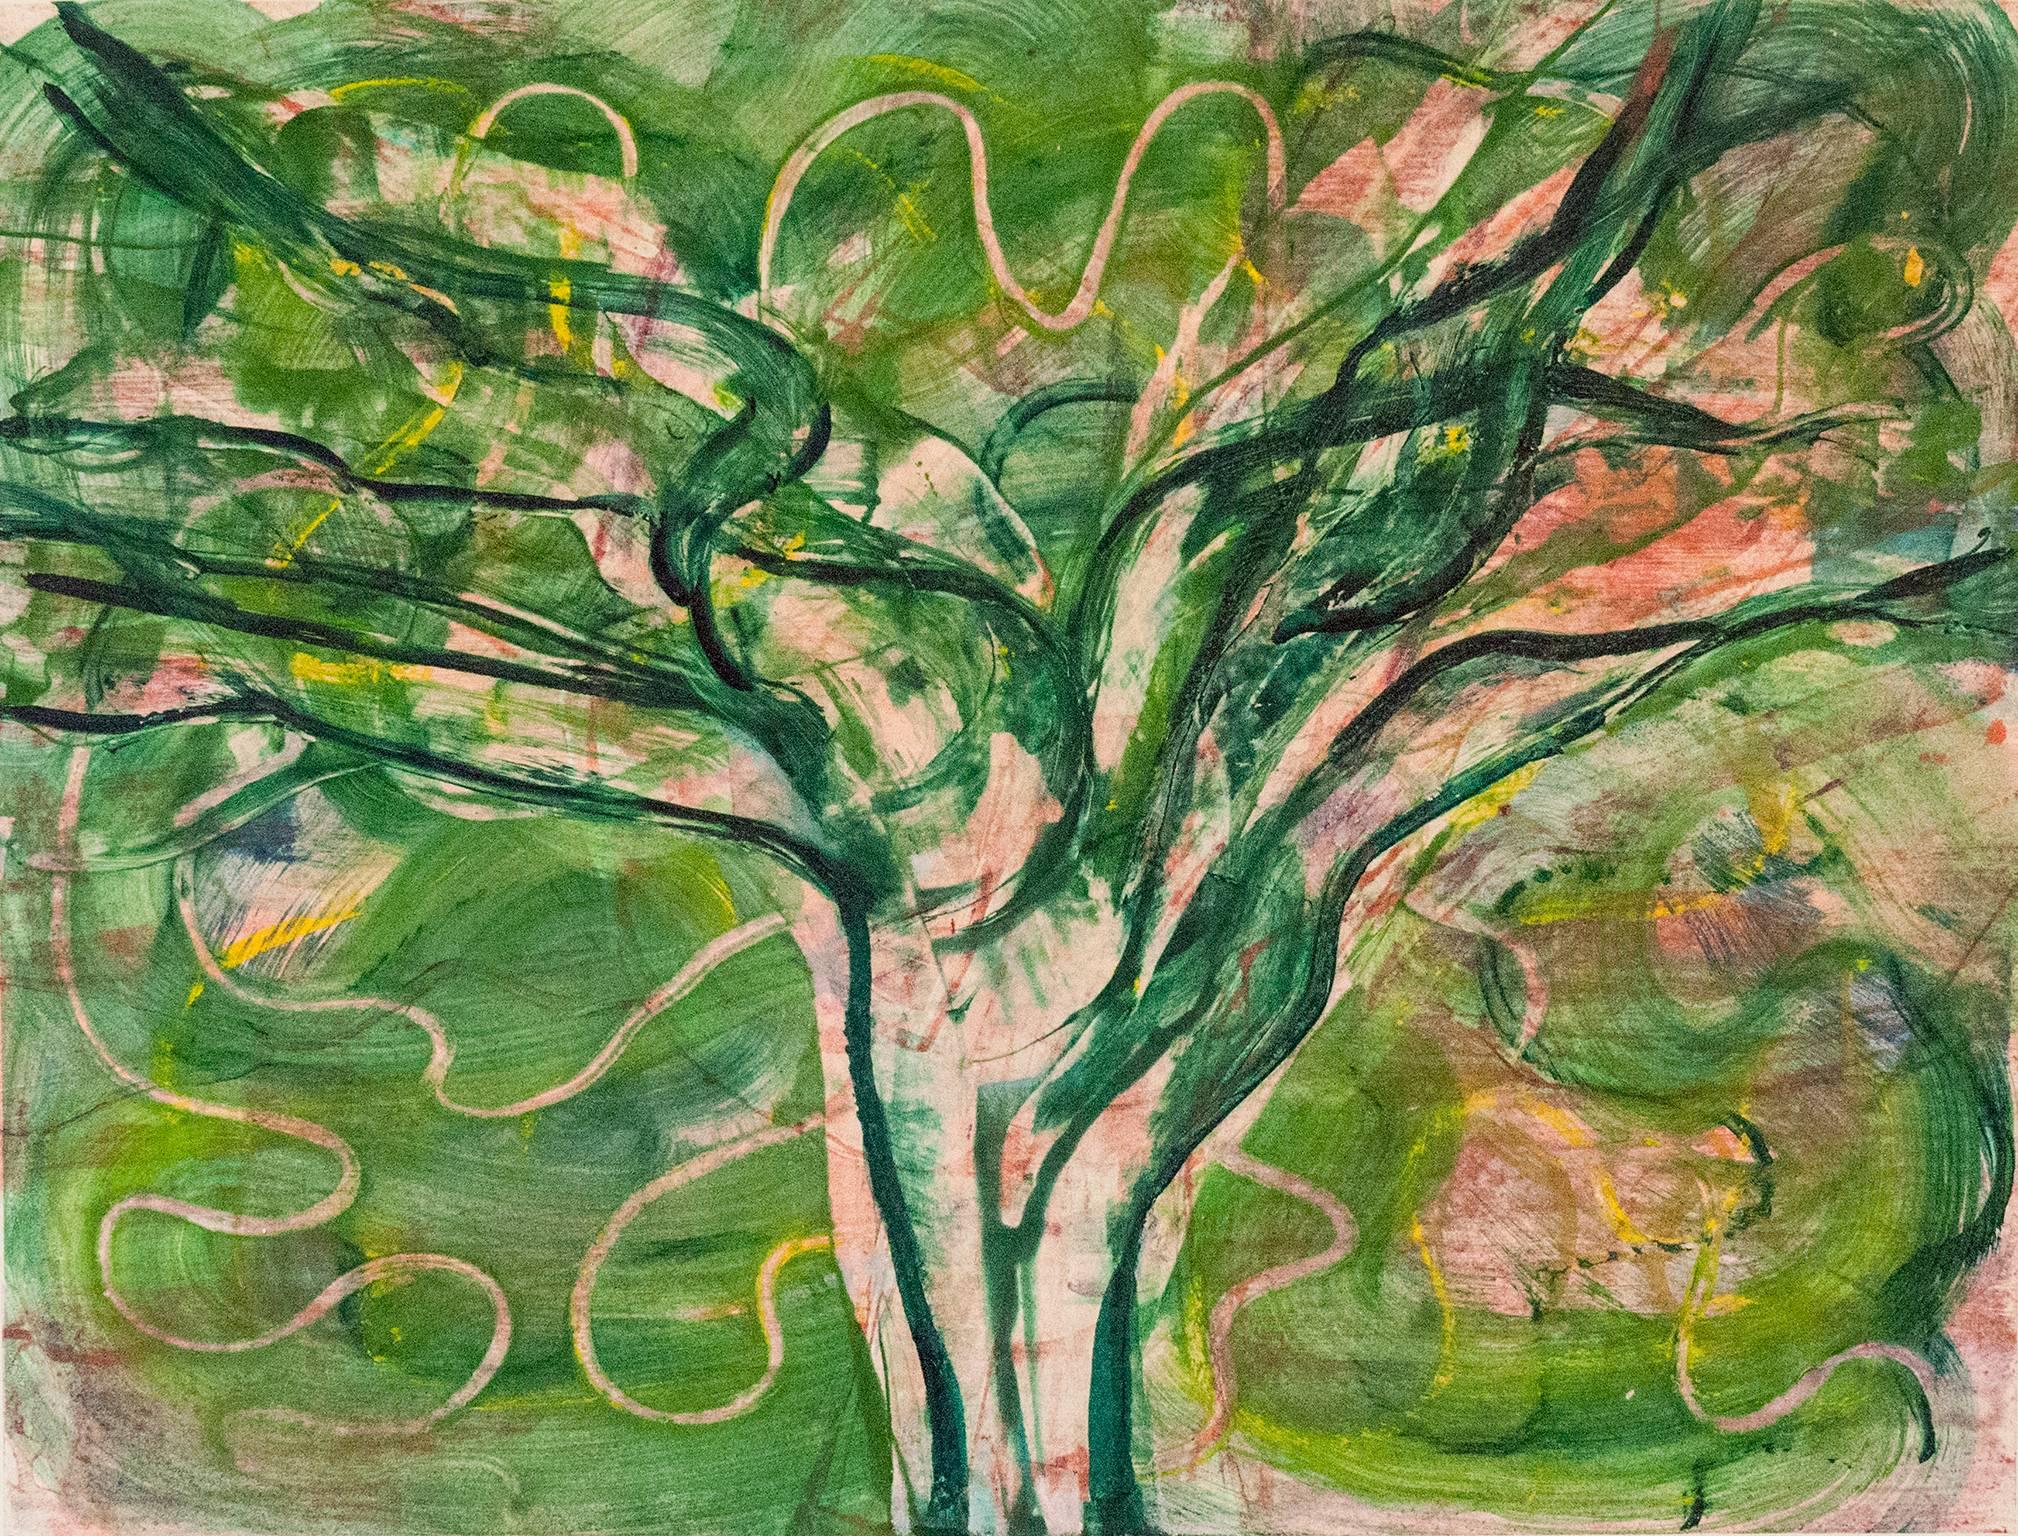 Deborah Freedman Landscape Print - "Imagined Possibilities 12", abstract tree monoprint, green, pink, ochre tones.